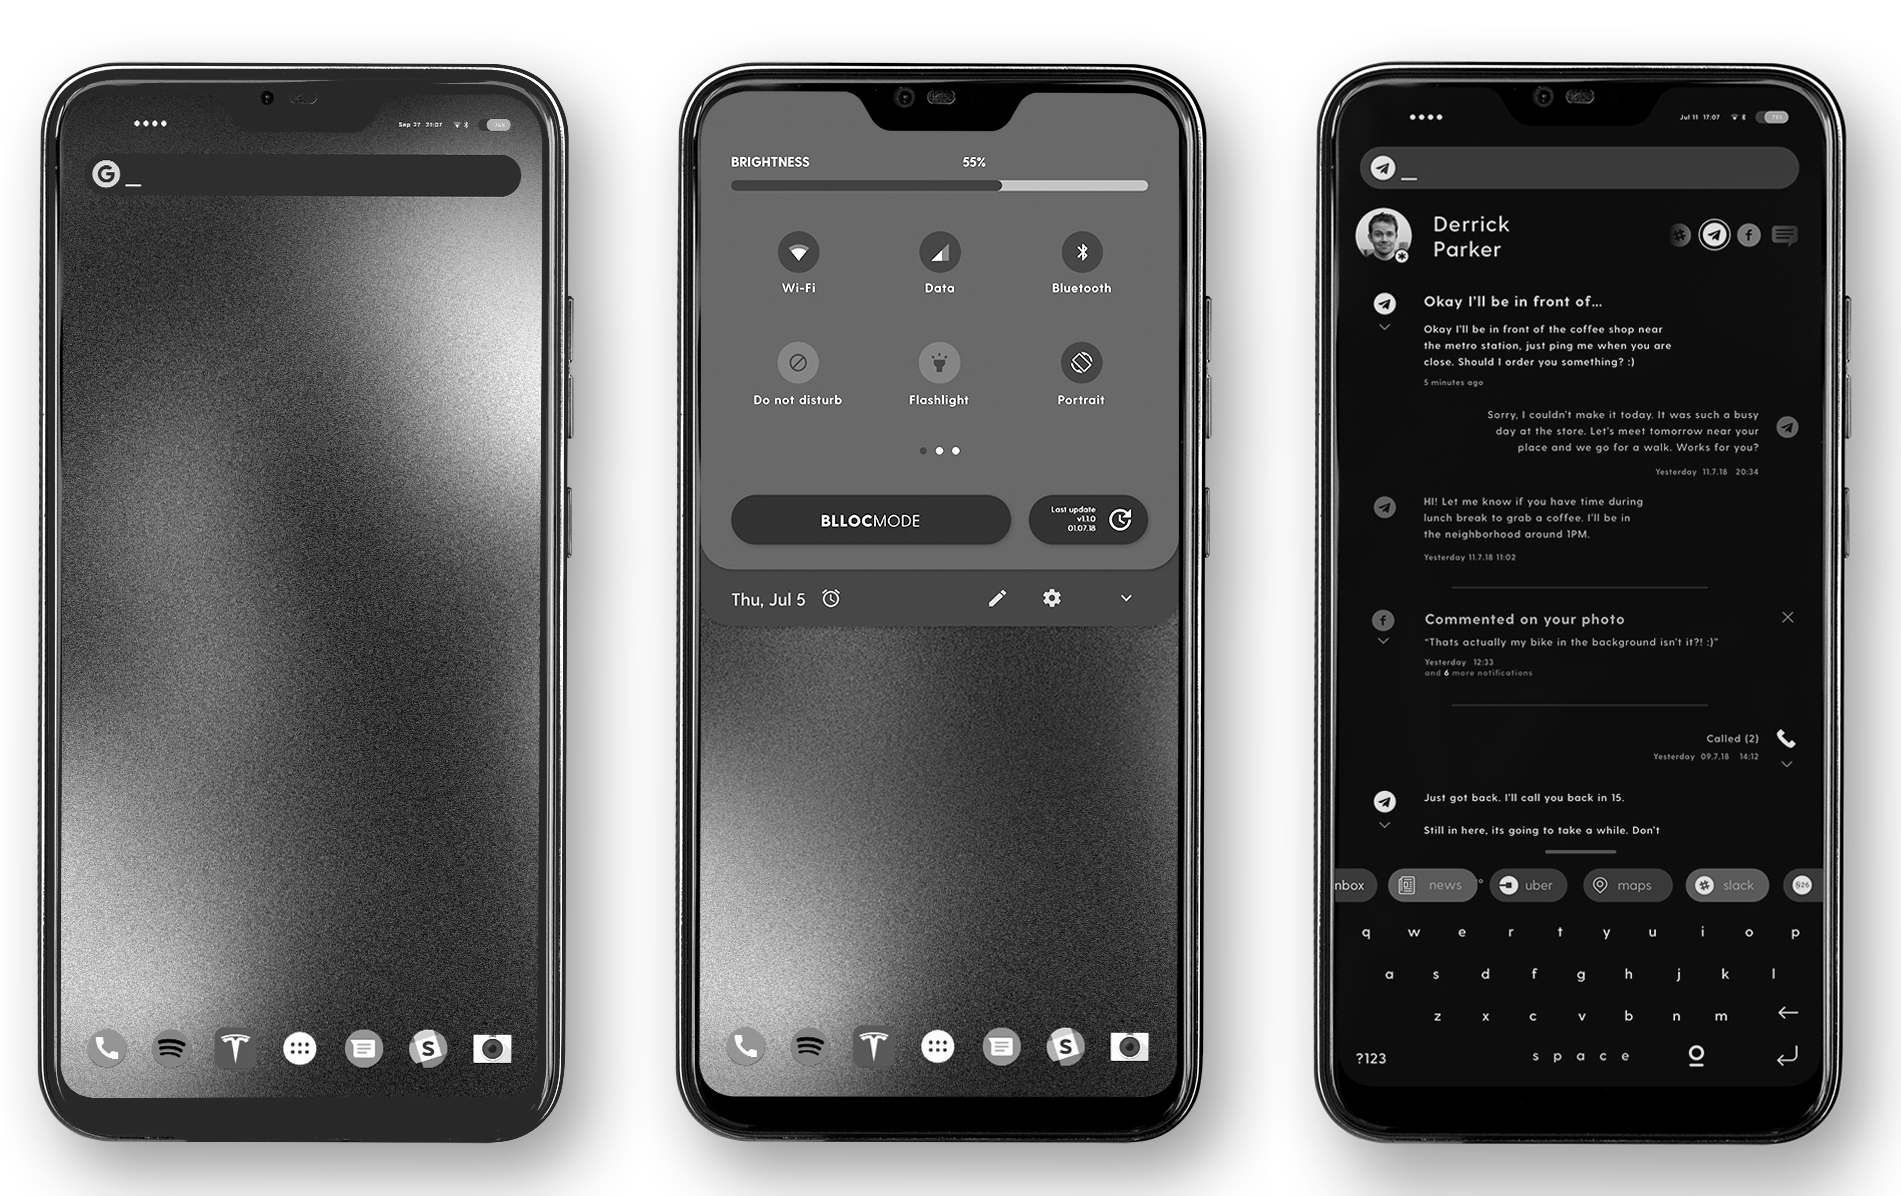 Three images of the Blloc Zero 18 smartphone.